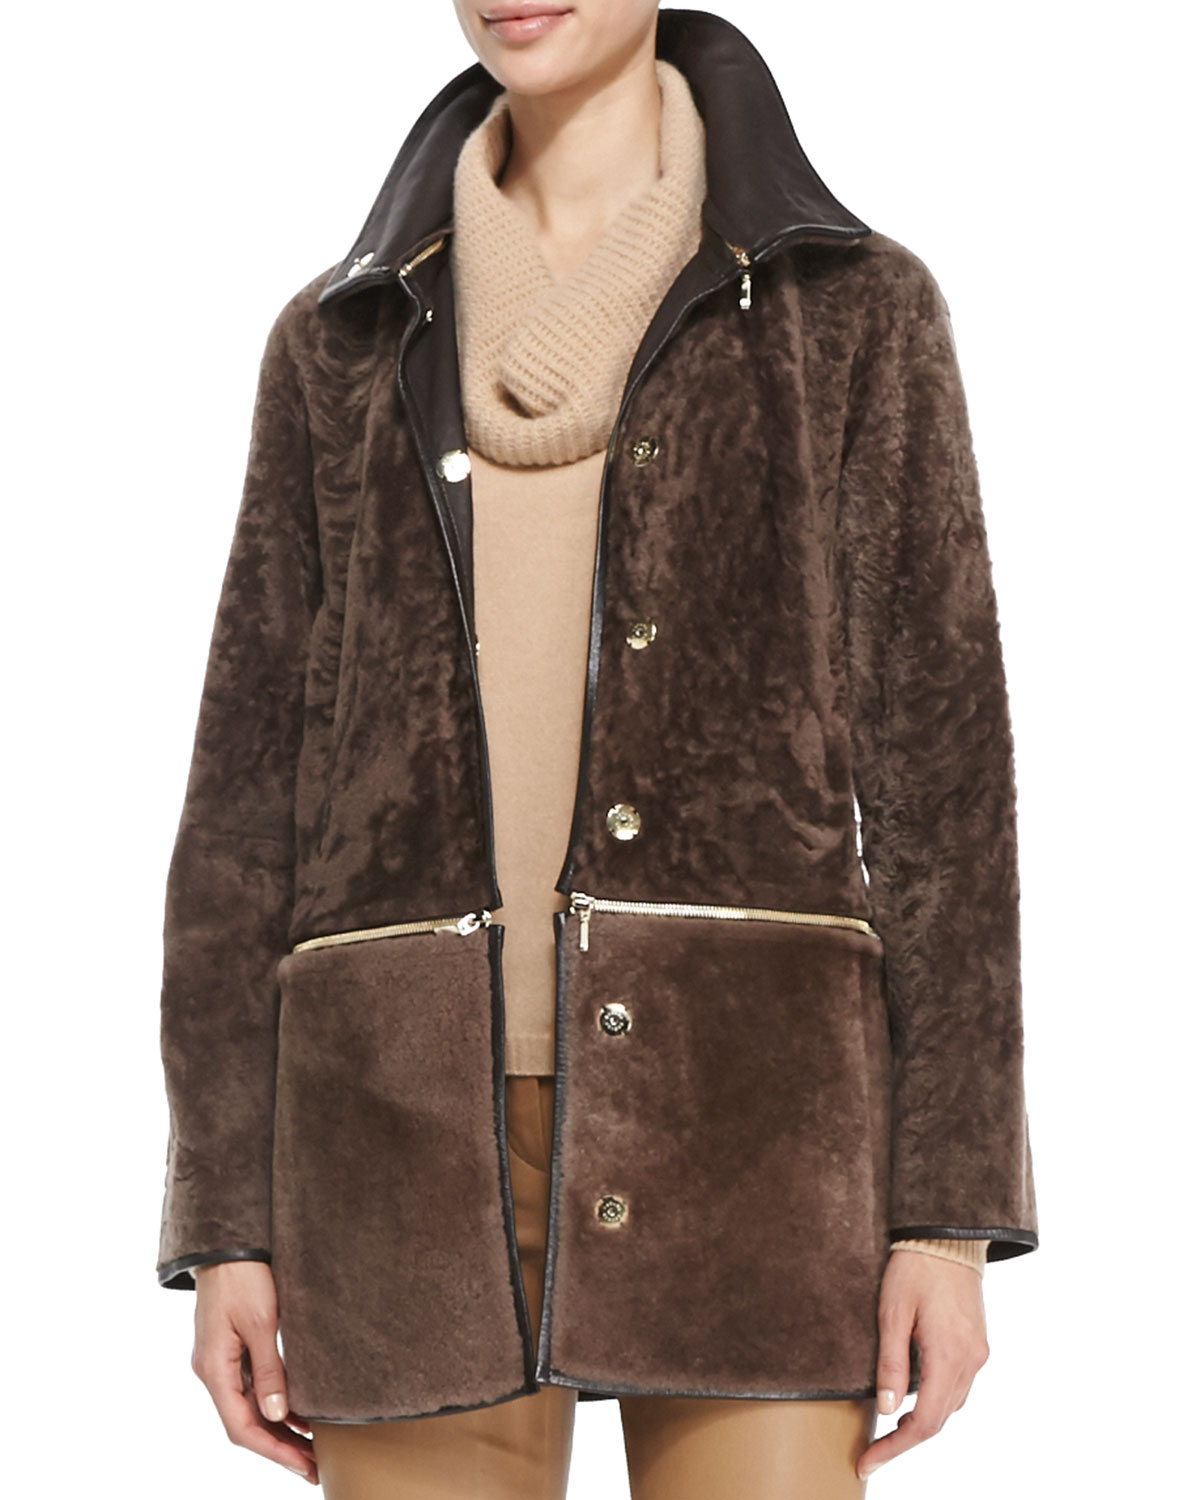 Lyst - Escada Fur Jacket With Zip-Off Bottom in Brown